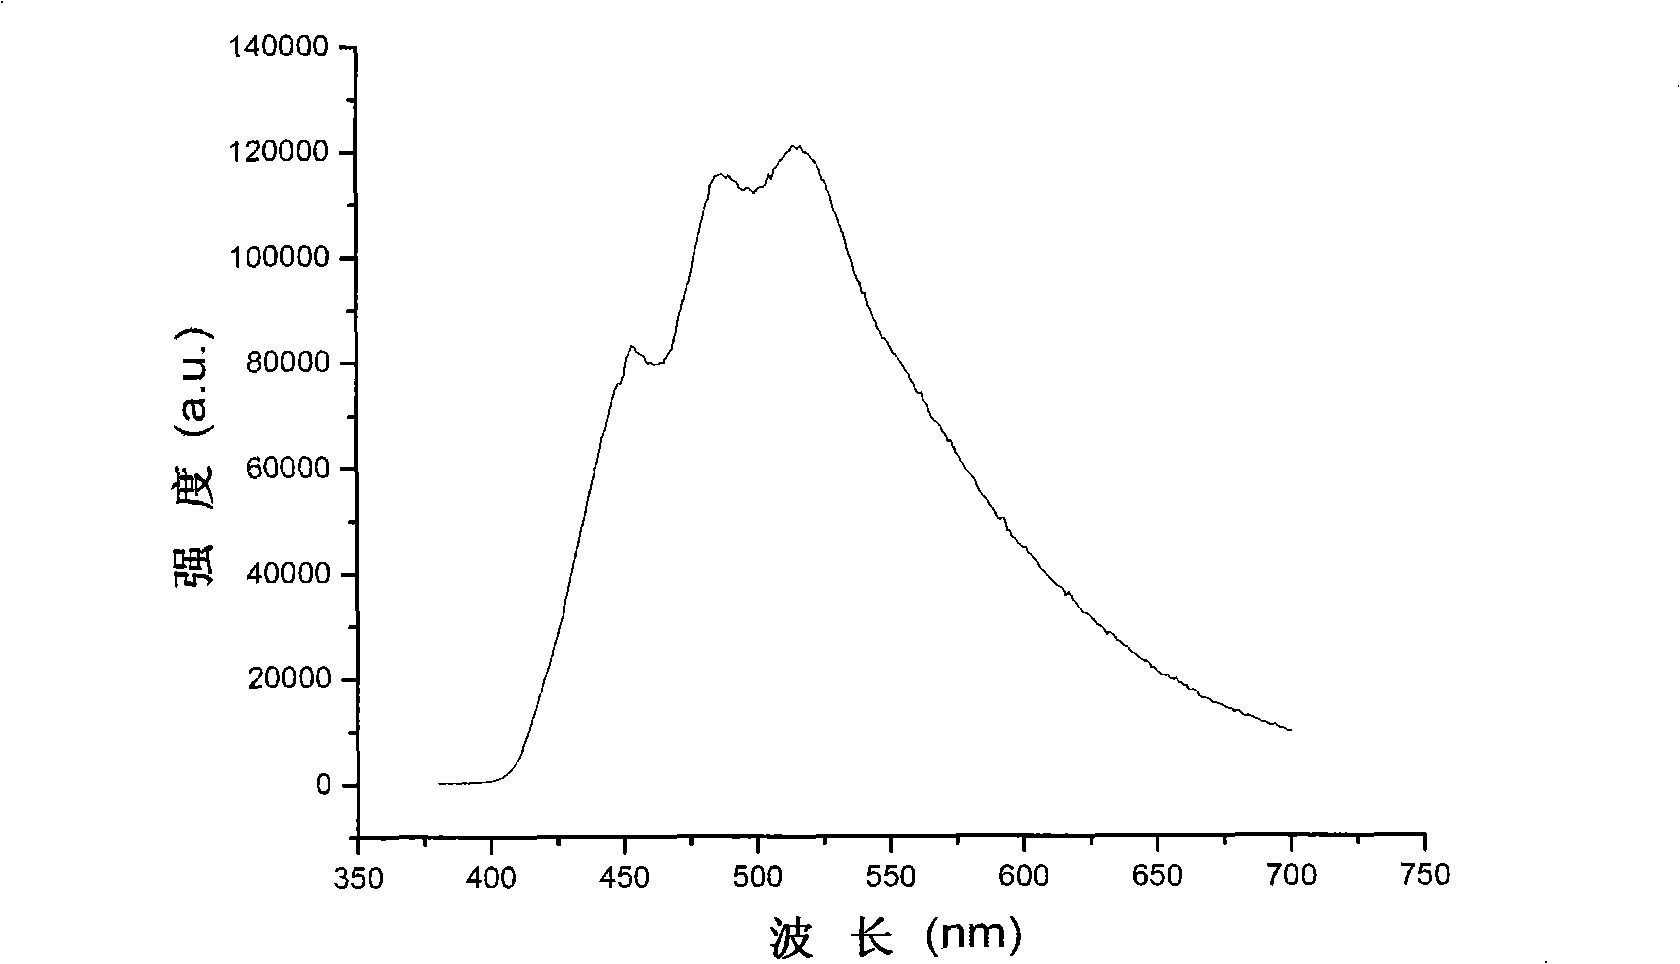 Method for preparing beta, beta'-binary (4-pyridyl) divinylbenzene